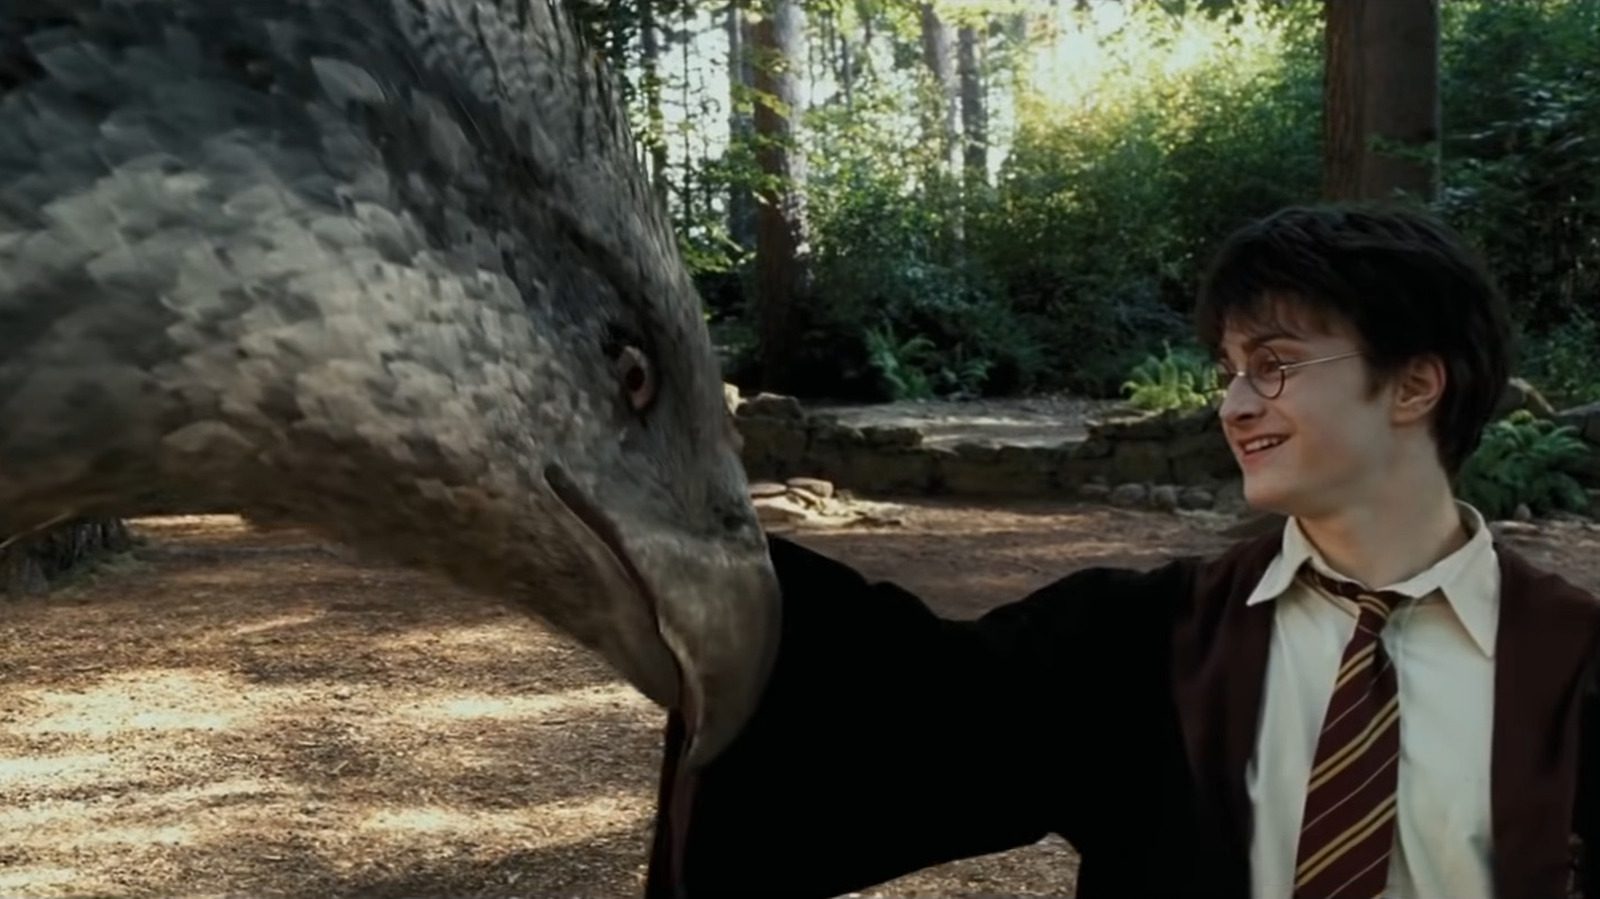 Buckbeak Had A Happy Ending The Harry Potter Films Never Showed